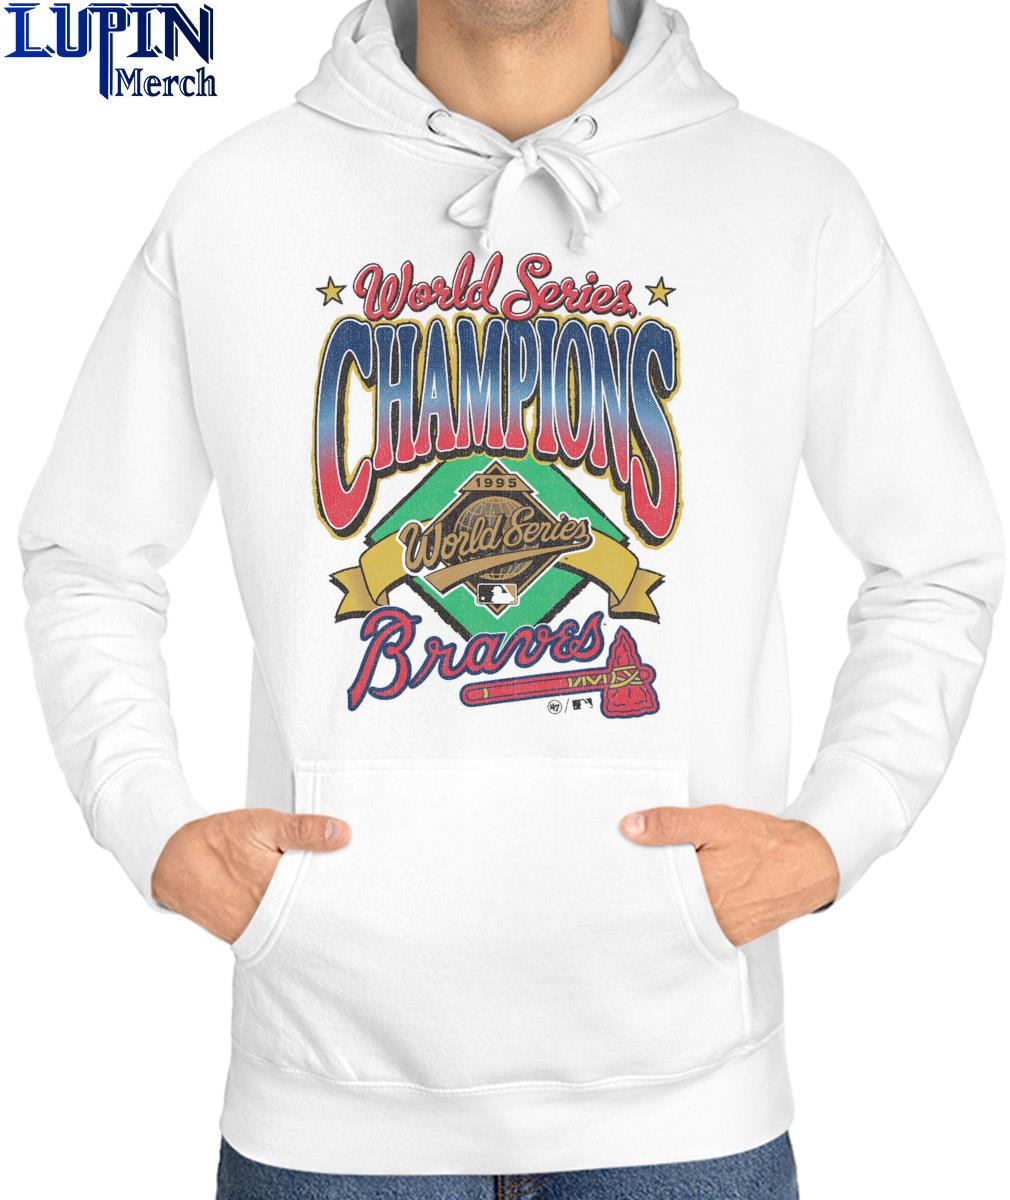 Atlanta Braves world series champs 1995 shirt, hoodie, sweatshirt